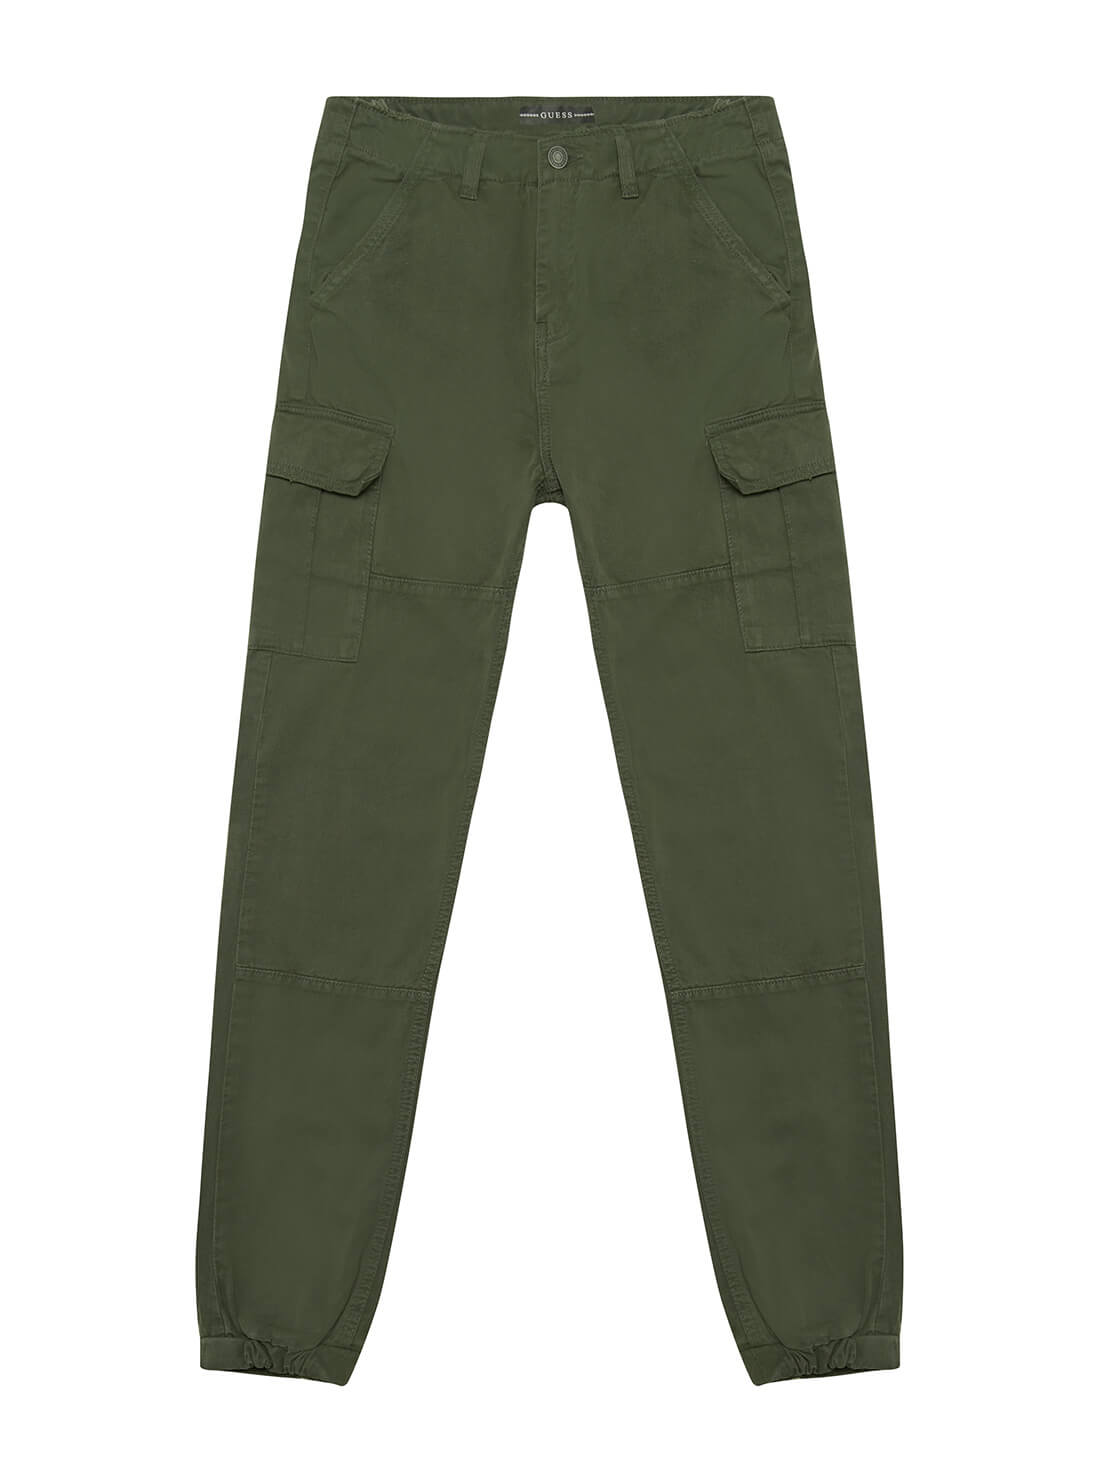 GUESS Big Boy Green Cargo Pants (7-16) L1YB09WE1L0 Front View